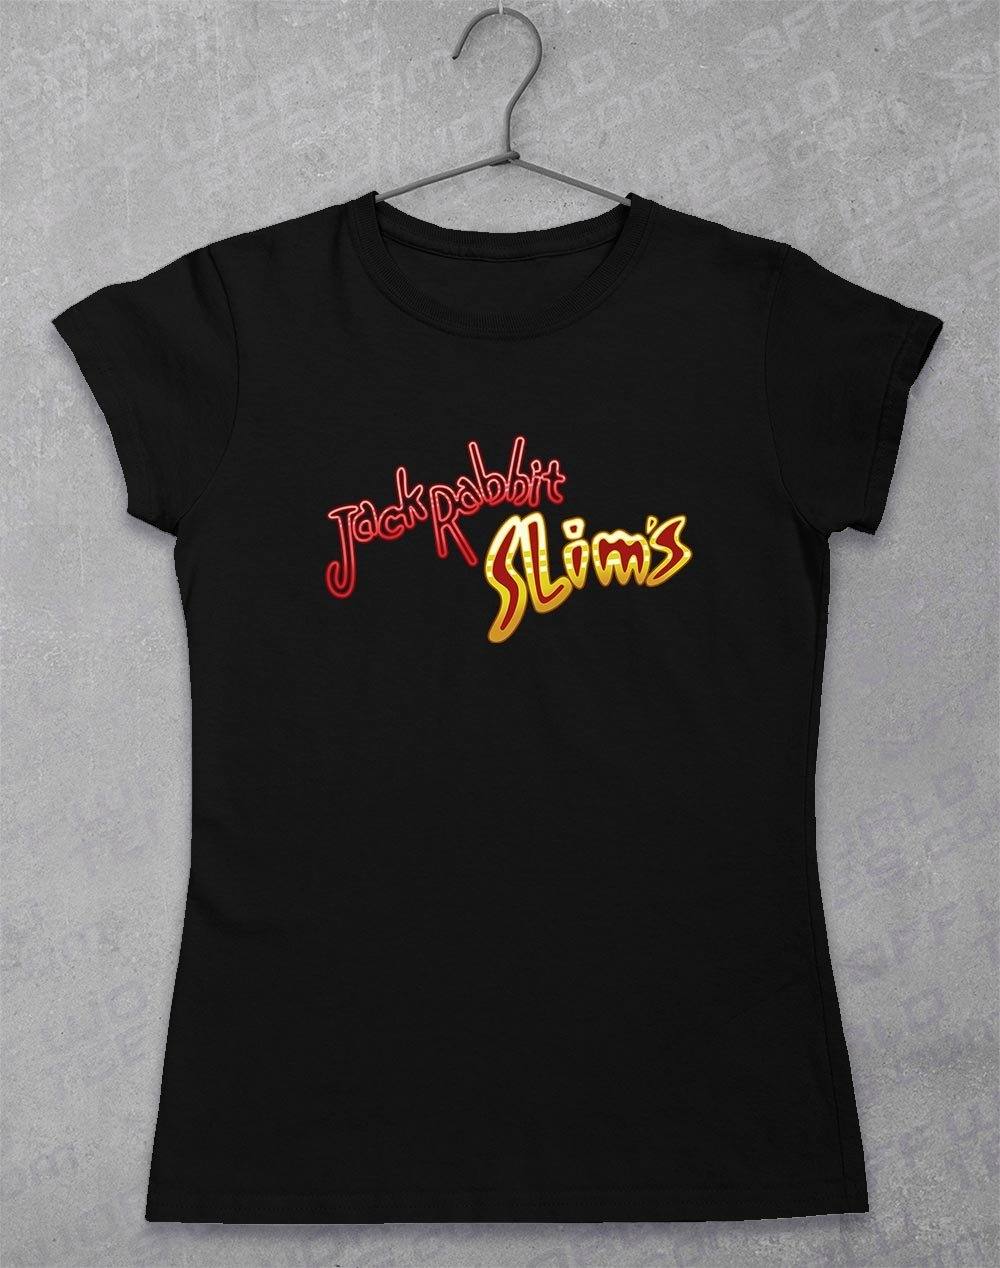 Jack Rabbit Slim's Women's T-Shirt 8-10 / Black  - Off World Tees